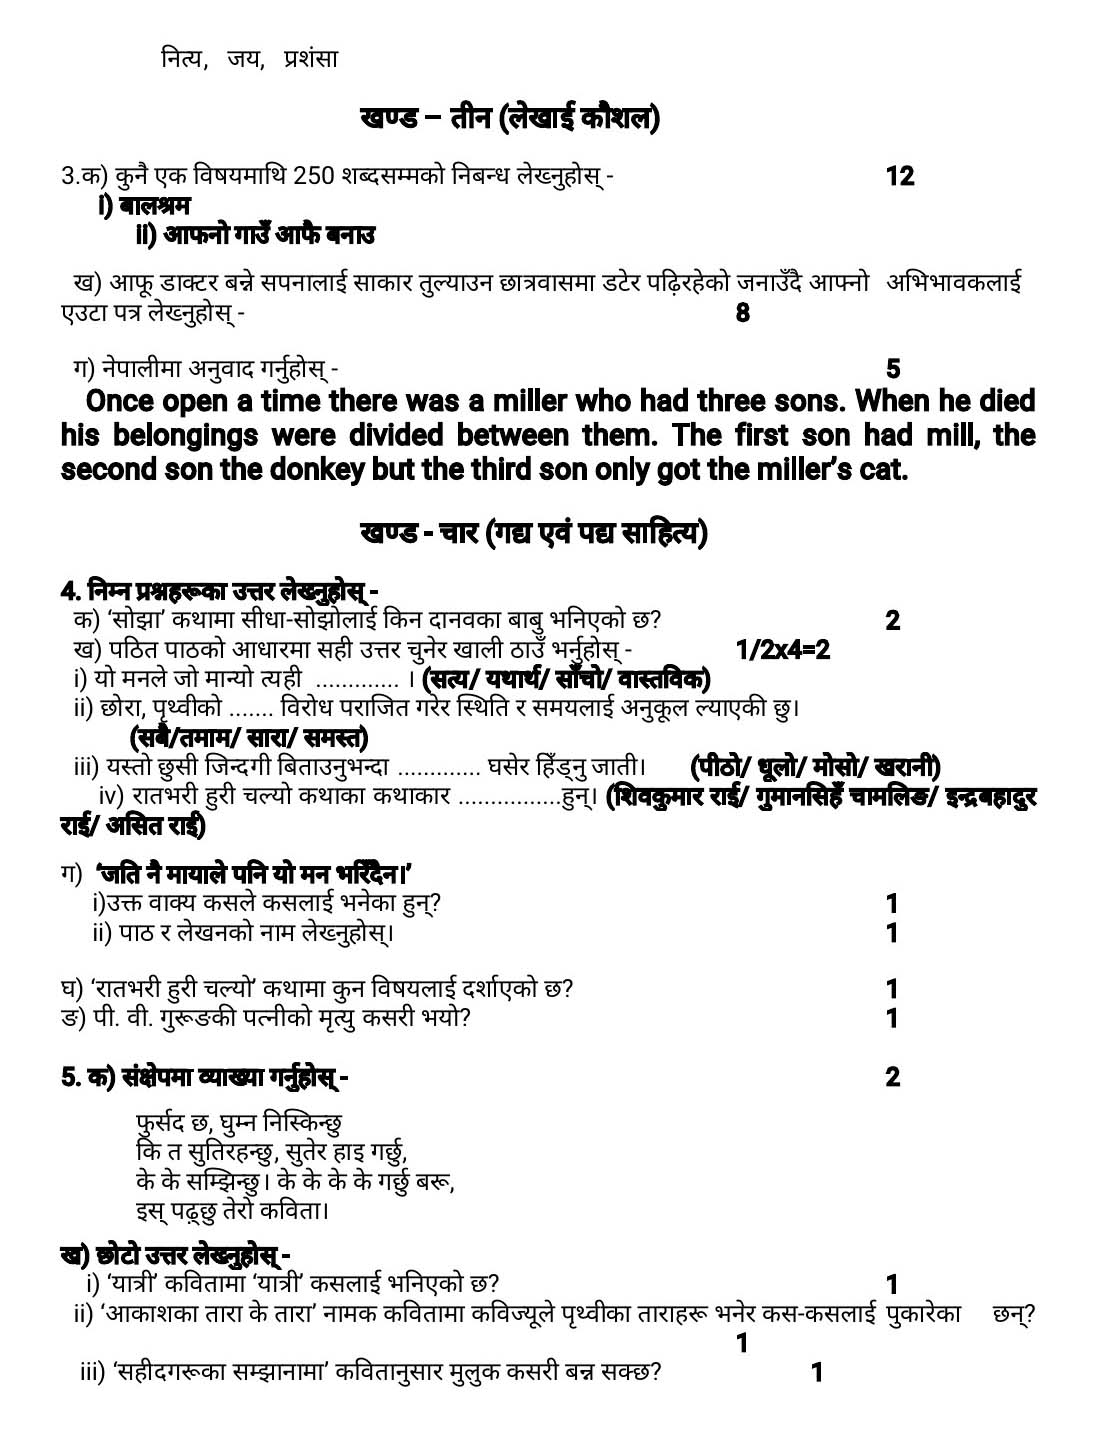 Nepali CBSE Class X Sample Question Paper 2018-19 - Image 3